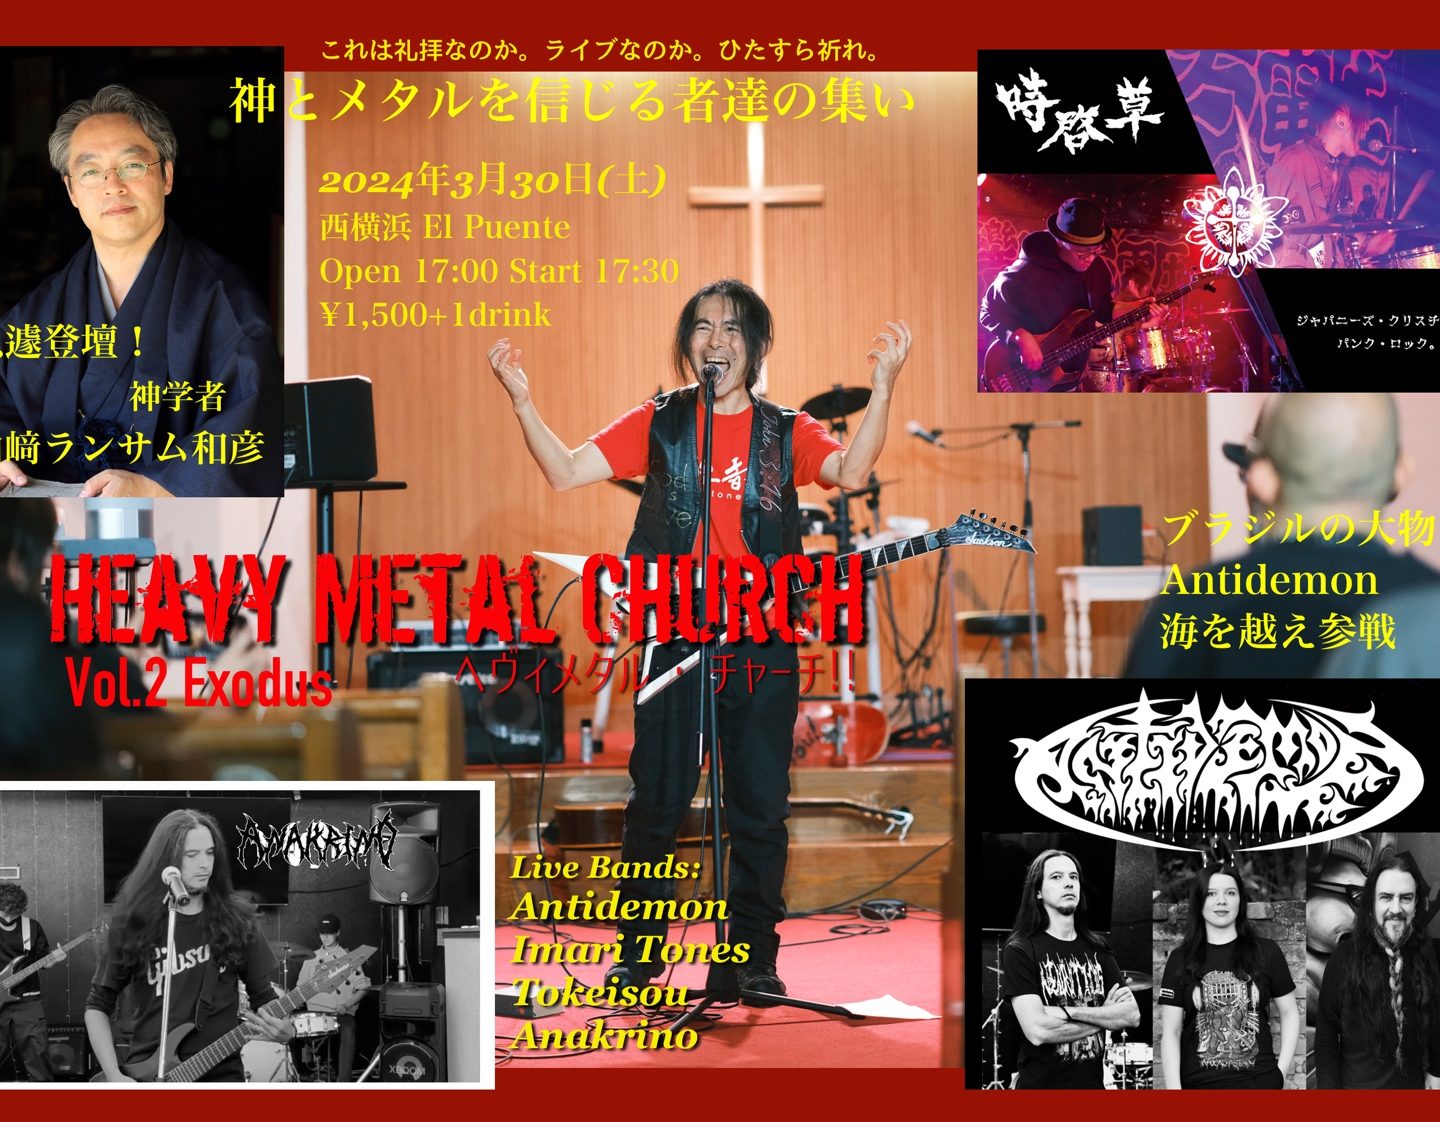 Heavy Metal Church event Vol.2